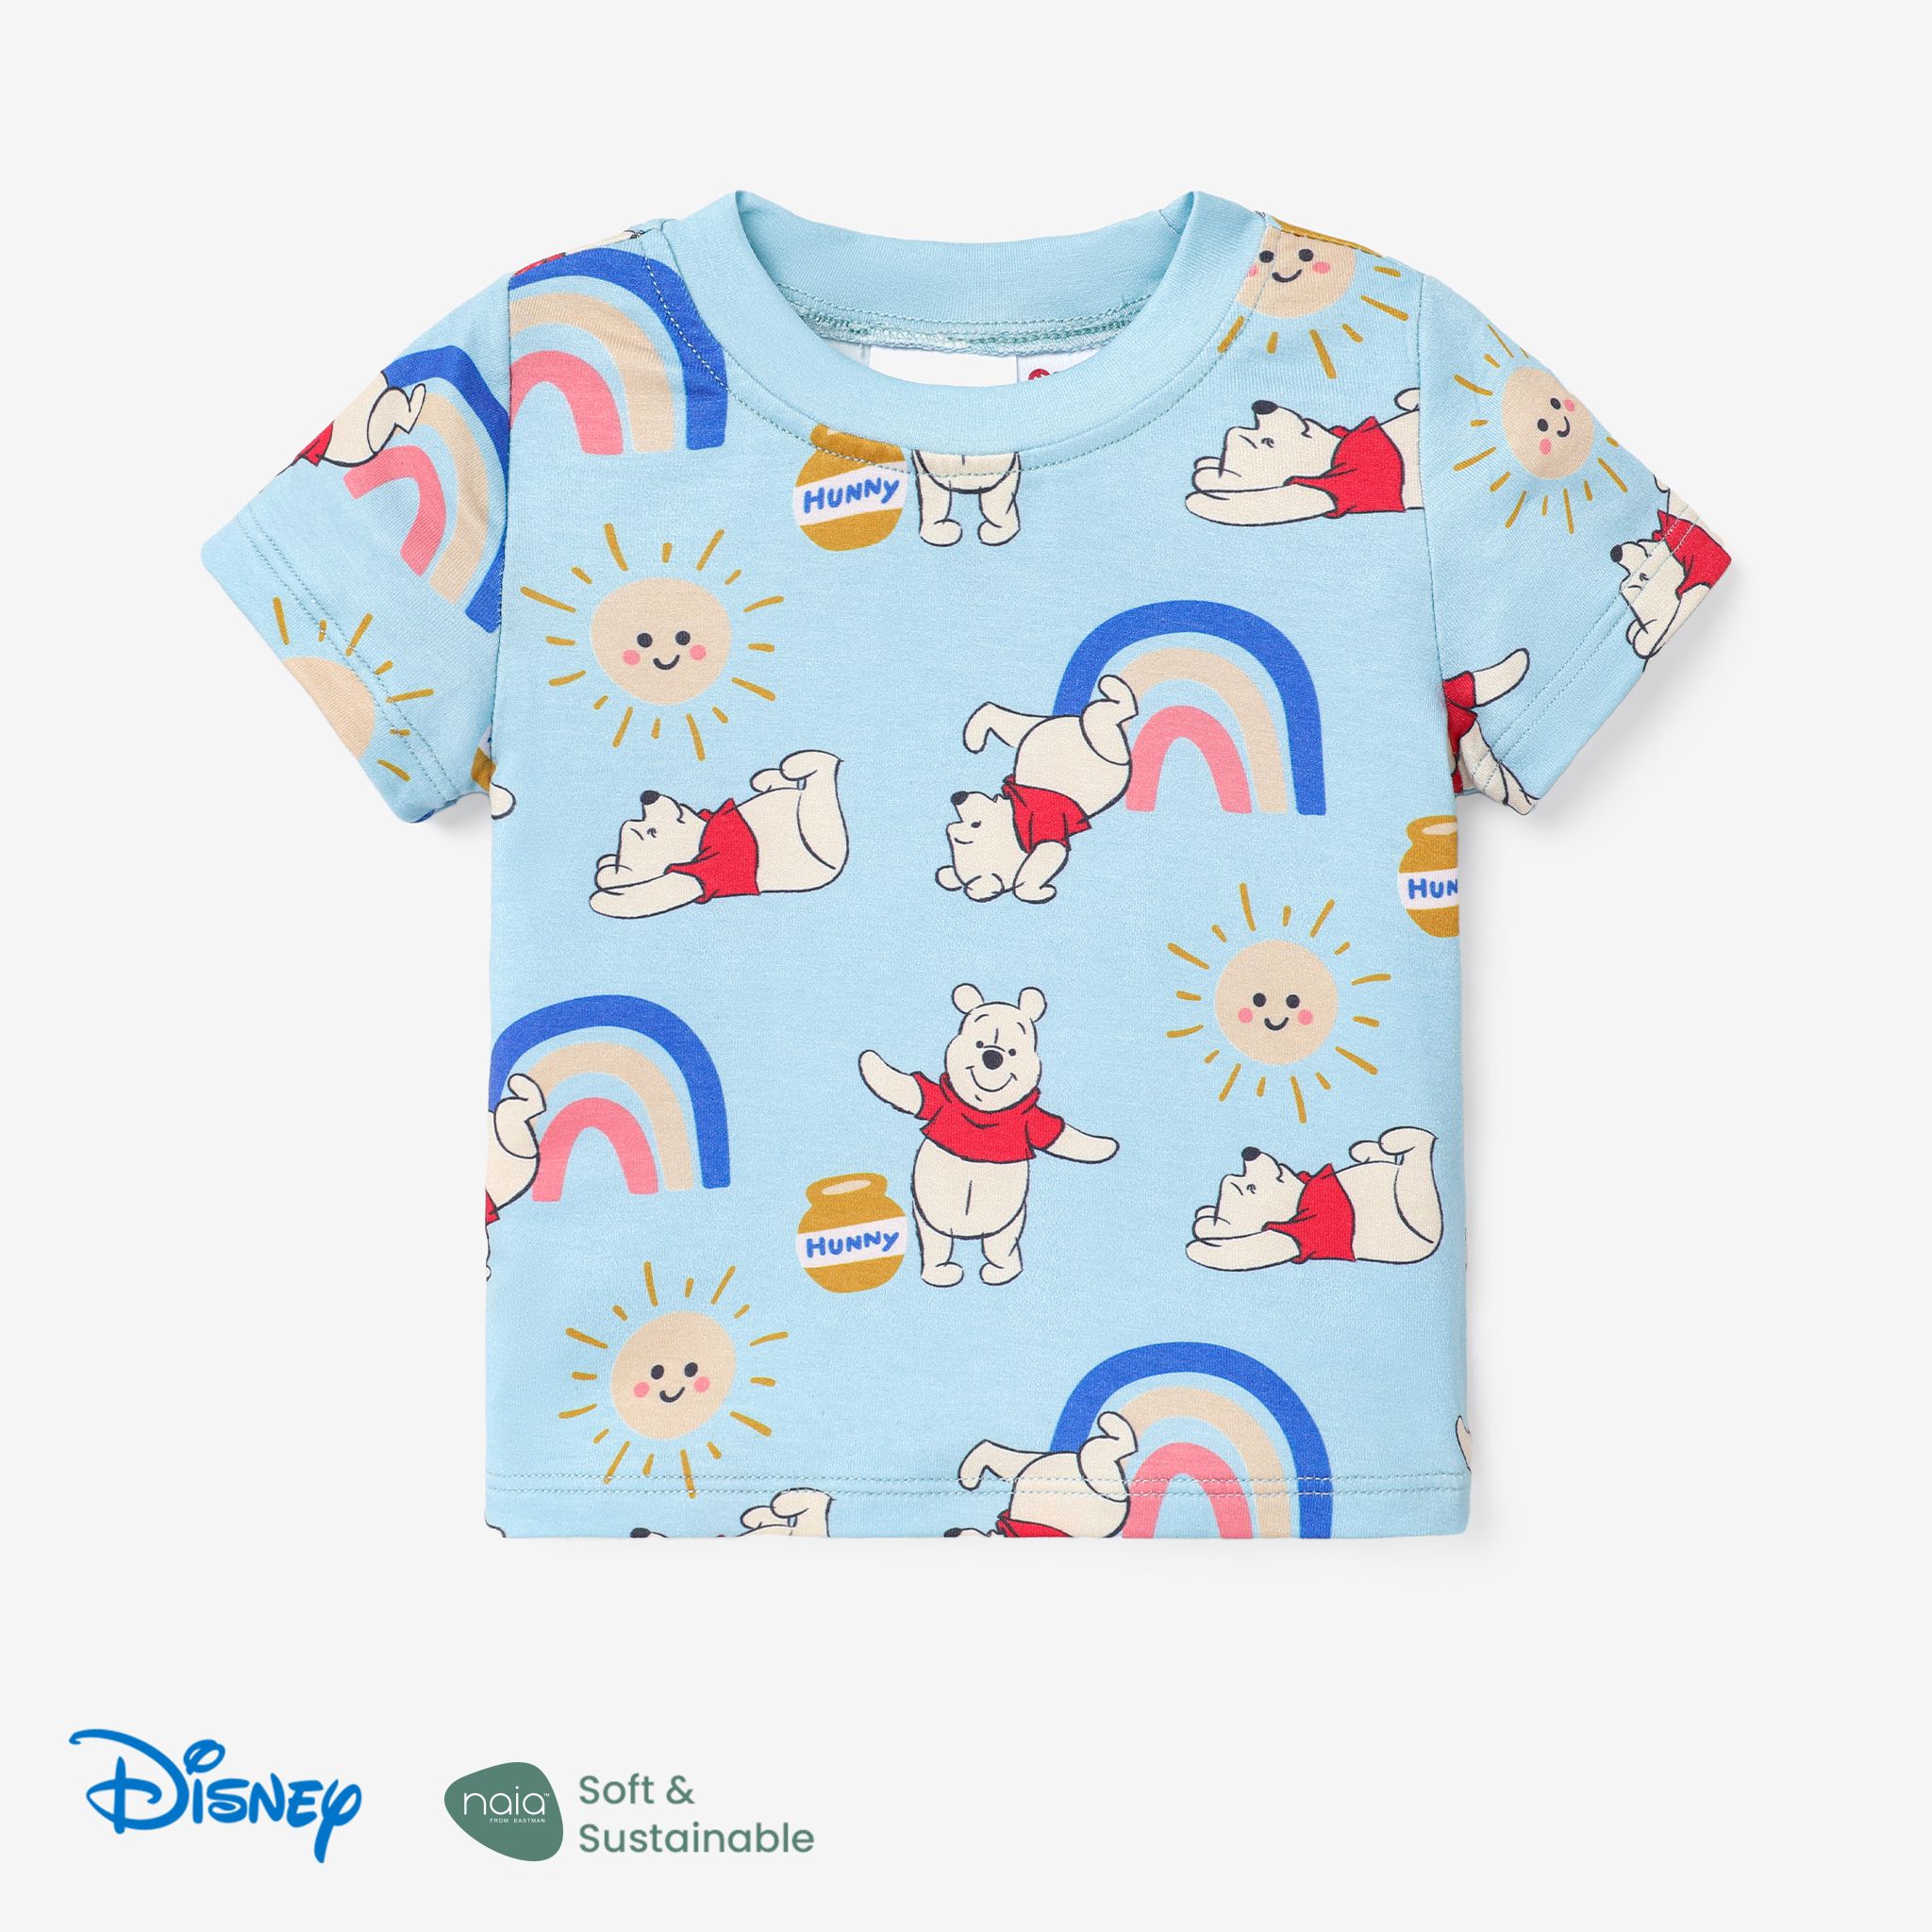 

Disney Winnie the Pooh 1pc Baby/Toddler Boys/Girls Naia™ Character Print Rainbow/Floral T-Shirt